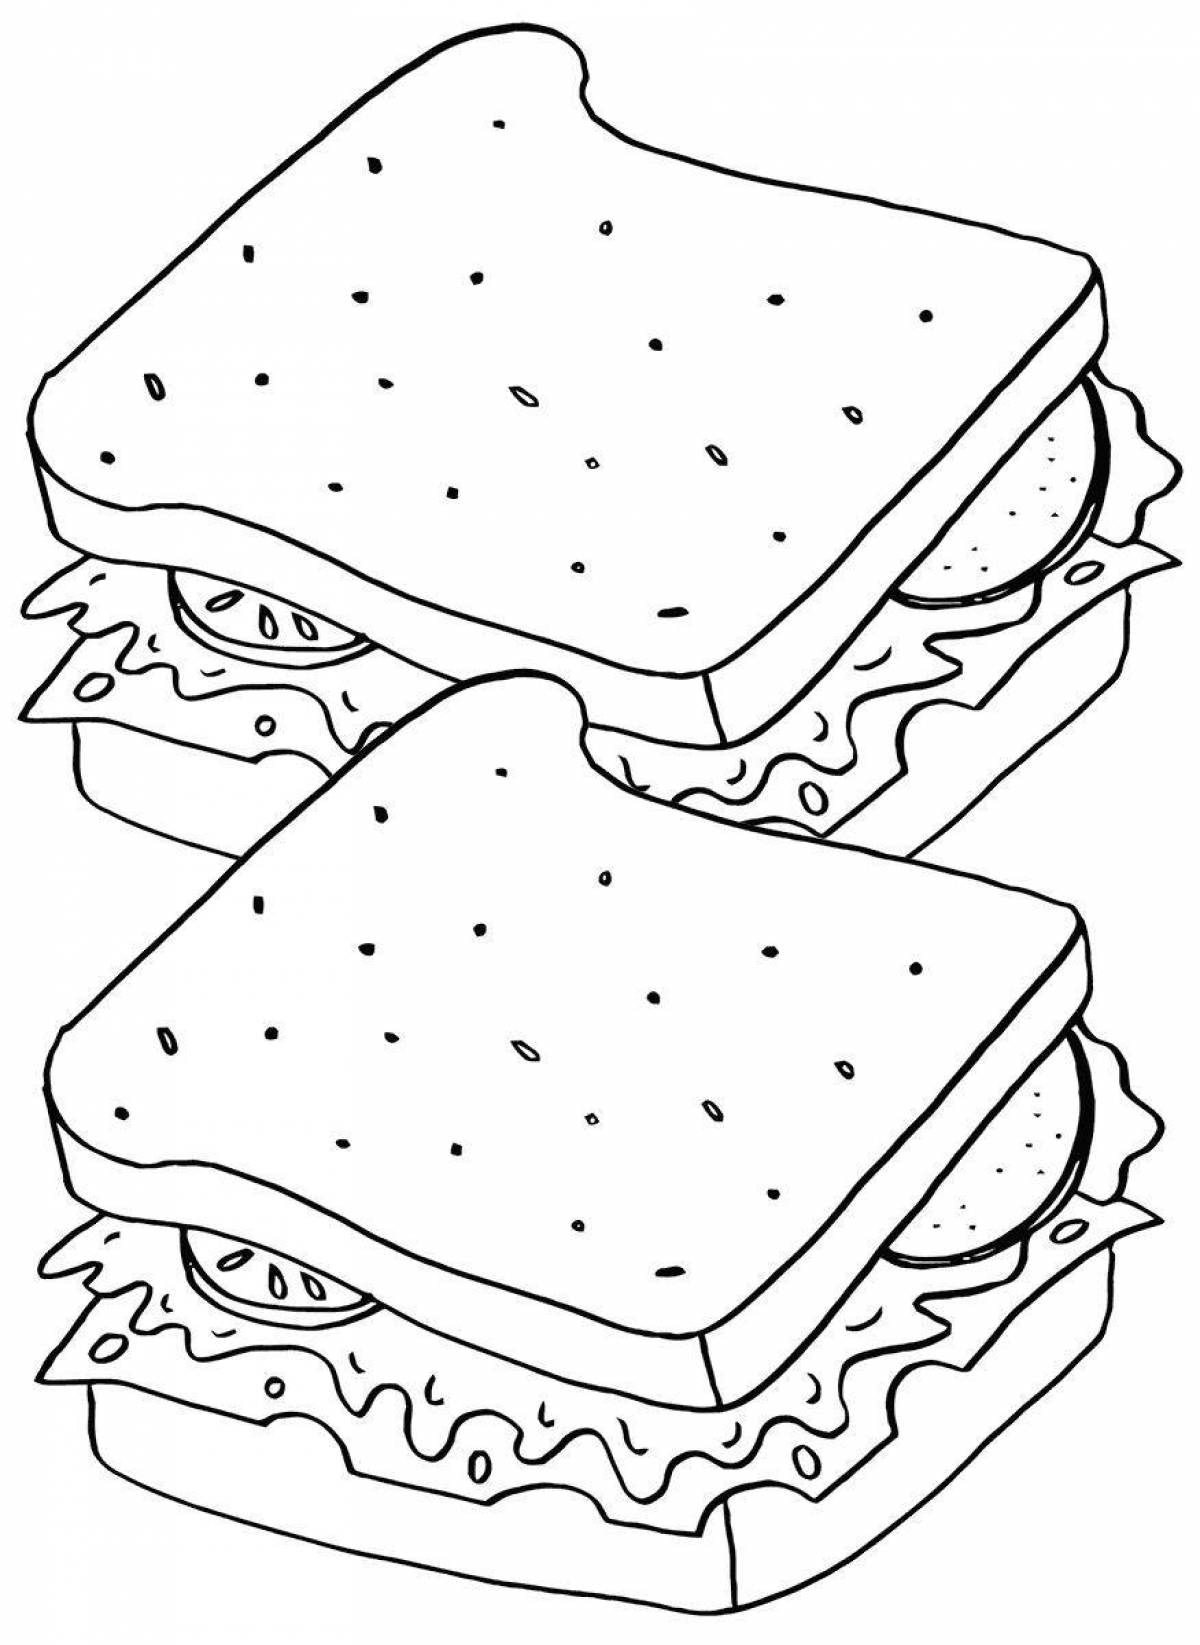 Sandwich fun coloring